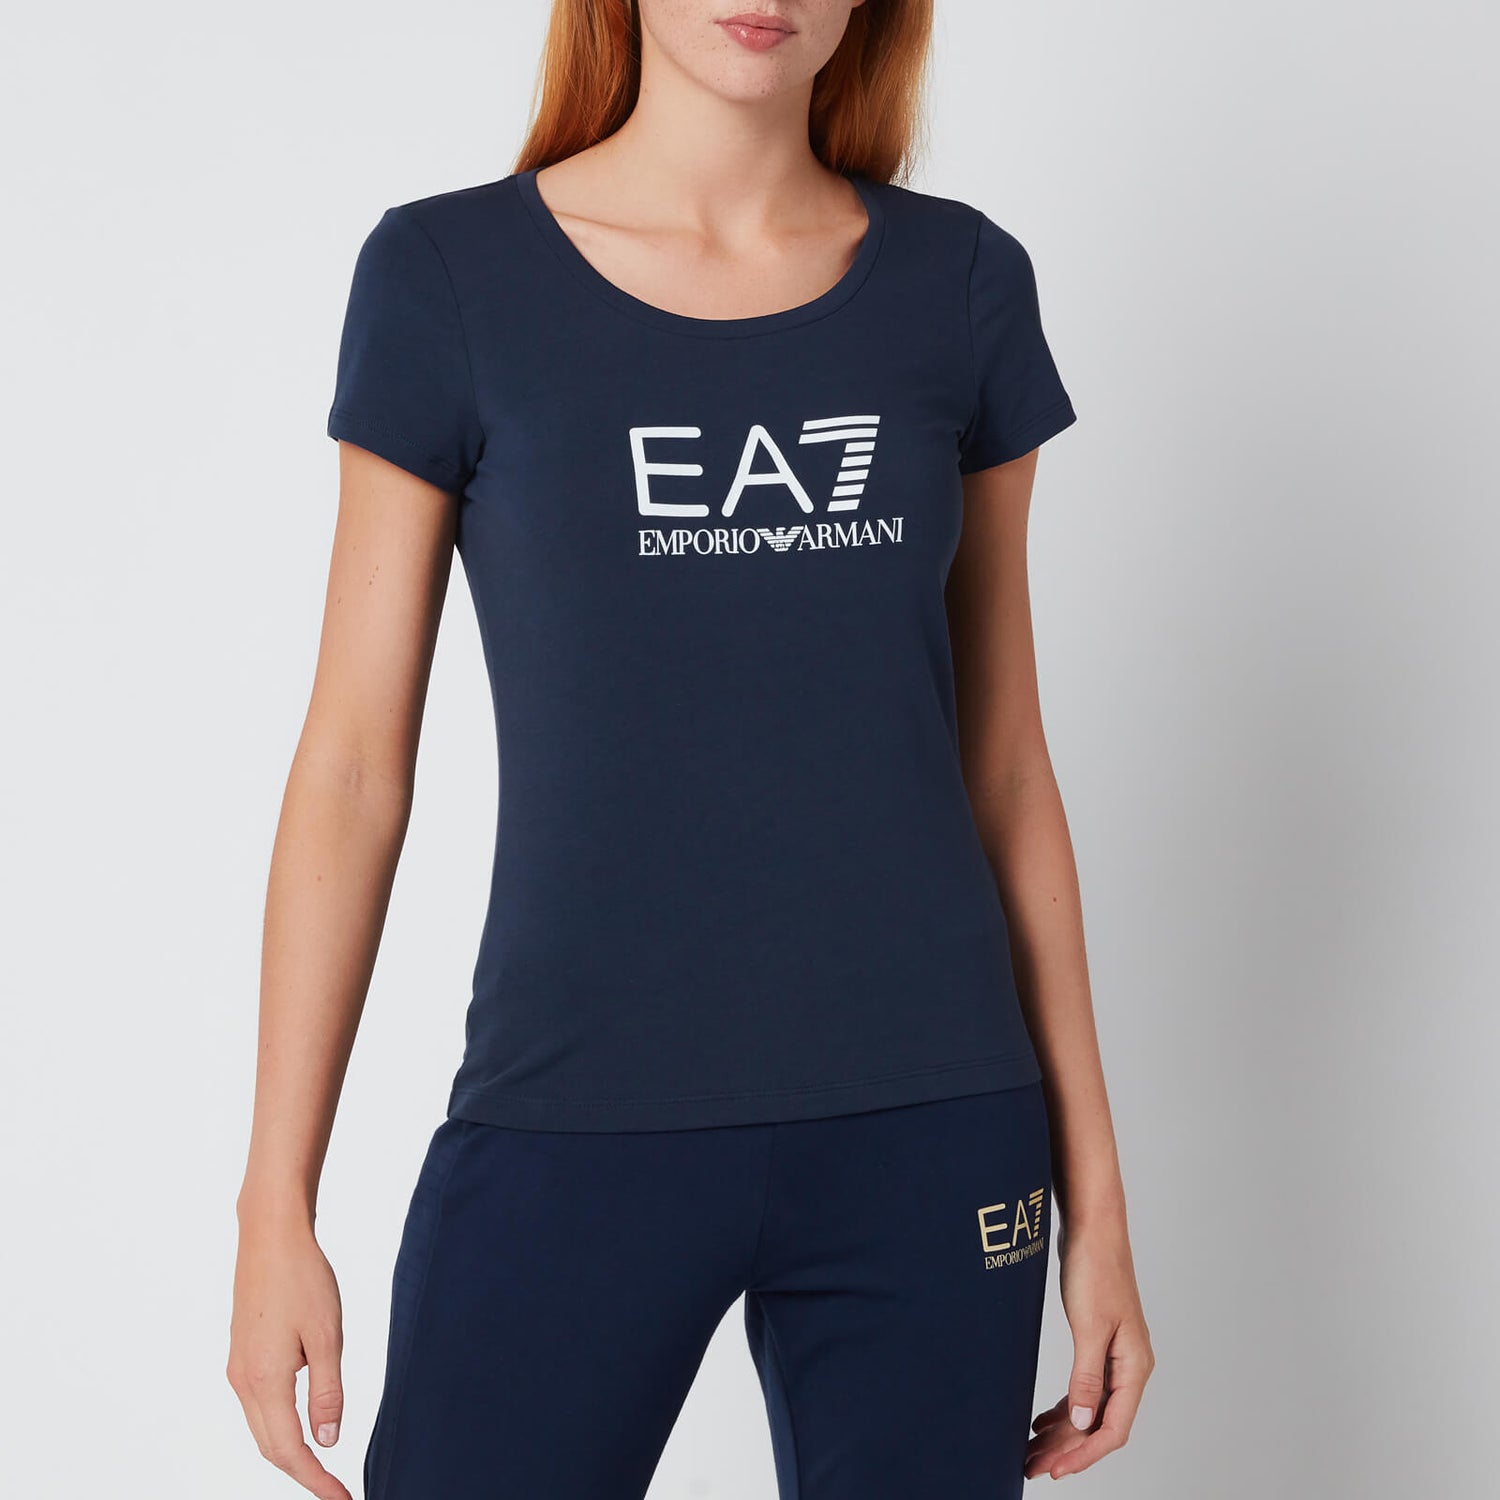 Emporio Armani EA7 Women's Train Shiny T-Shirt - Navy